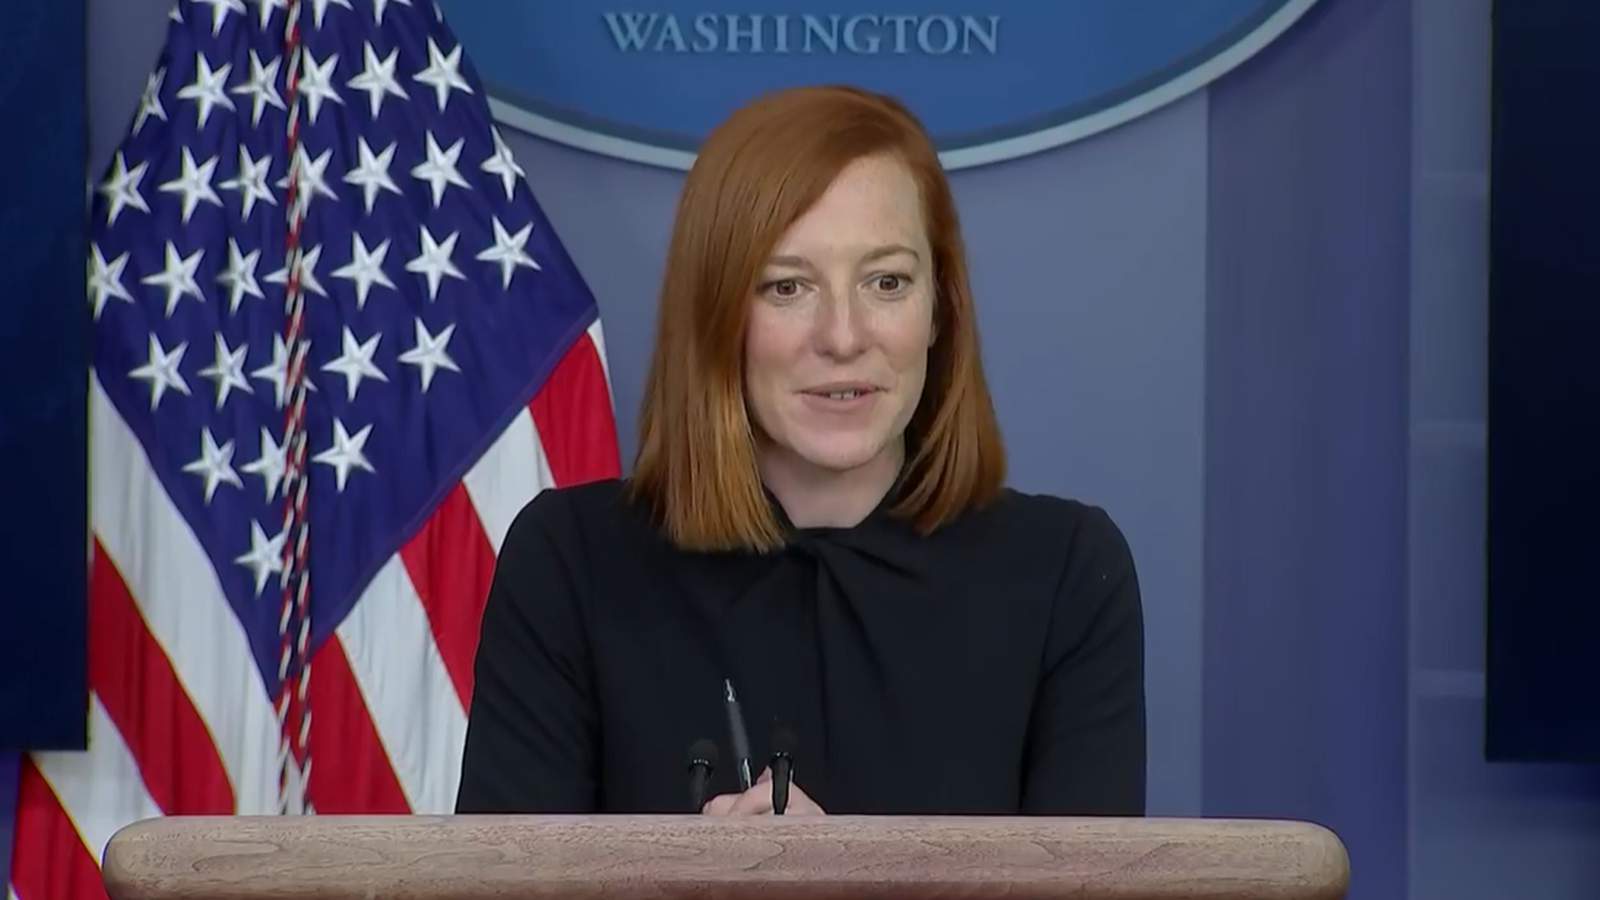 WATCH: White House press secretary Jen Psaki holds press briefing on economy